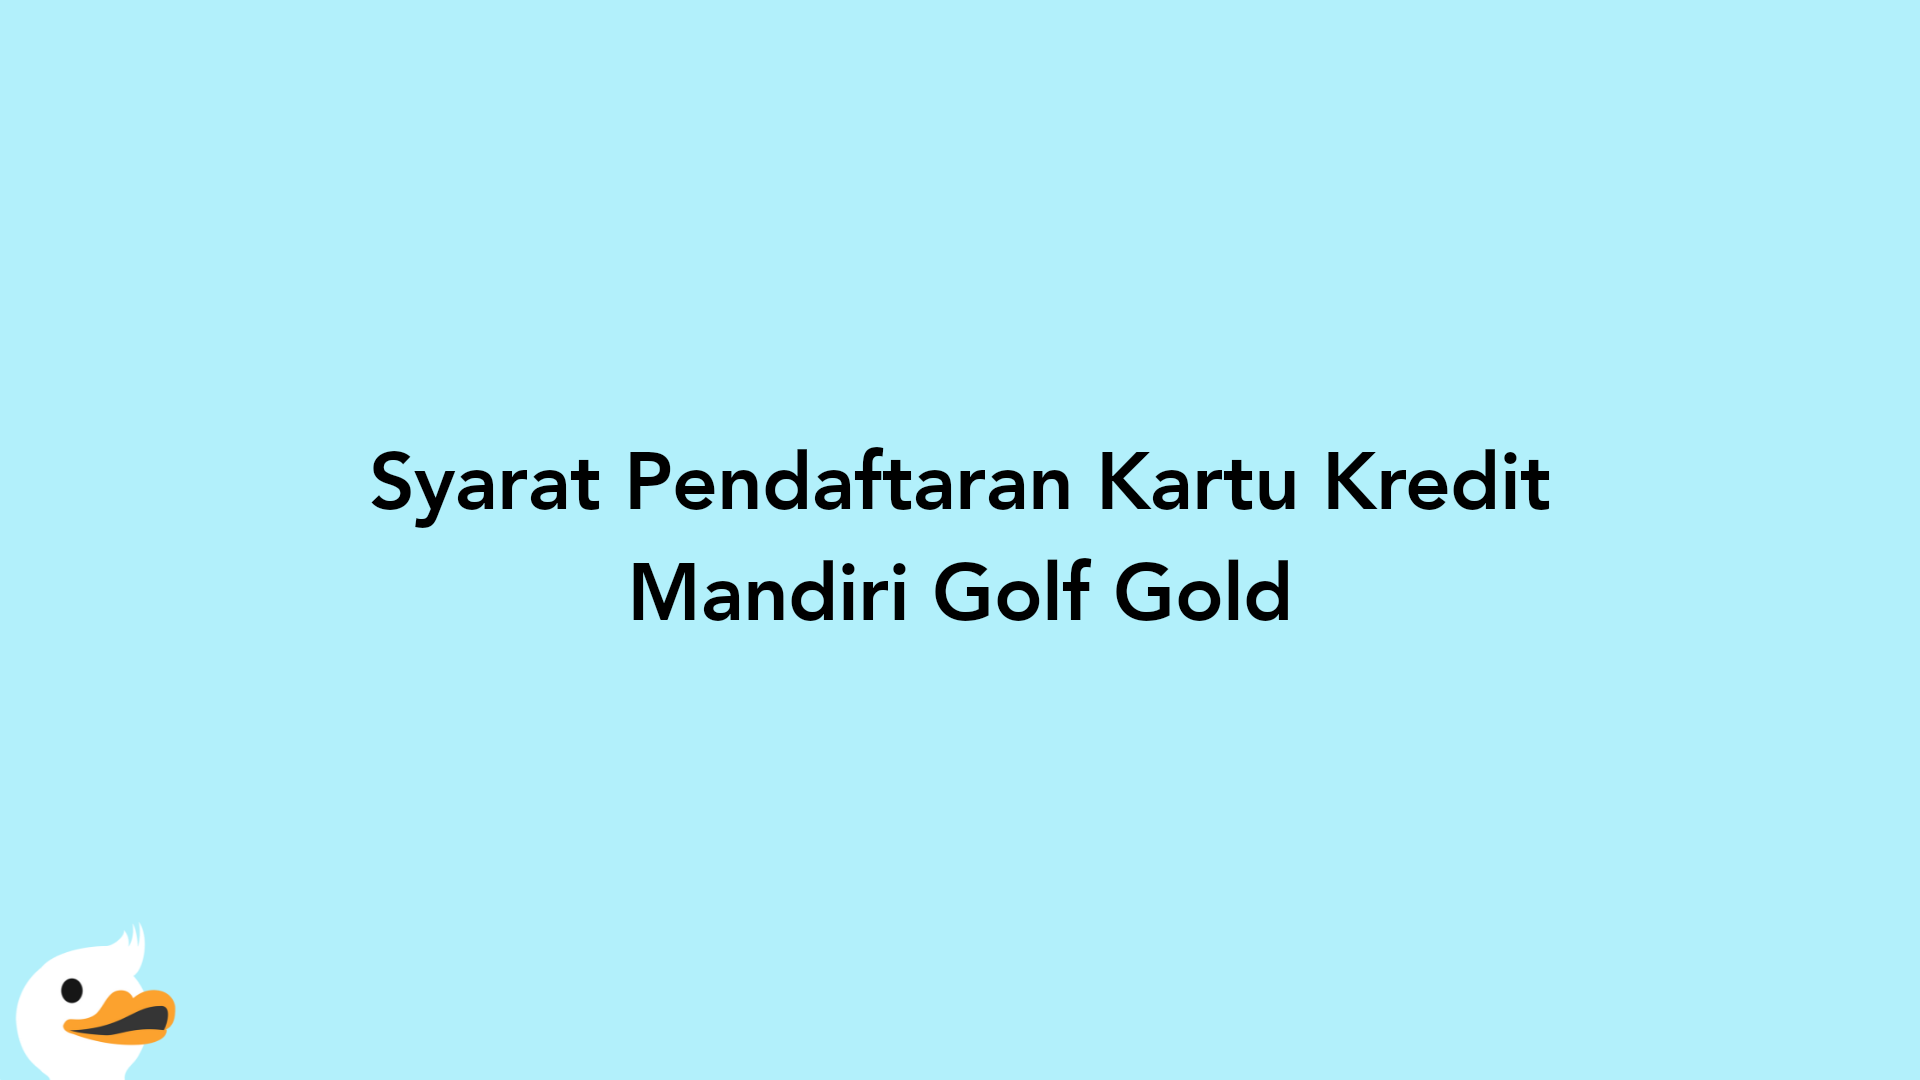 Syarat Pendaftaran Kartu Kredit Mandiri Golf Gold